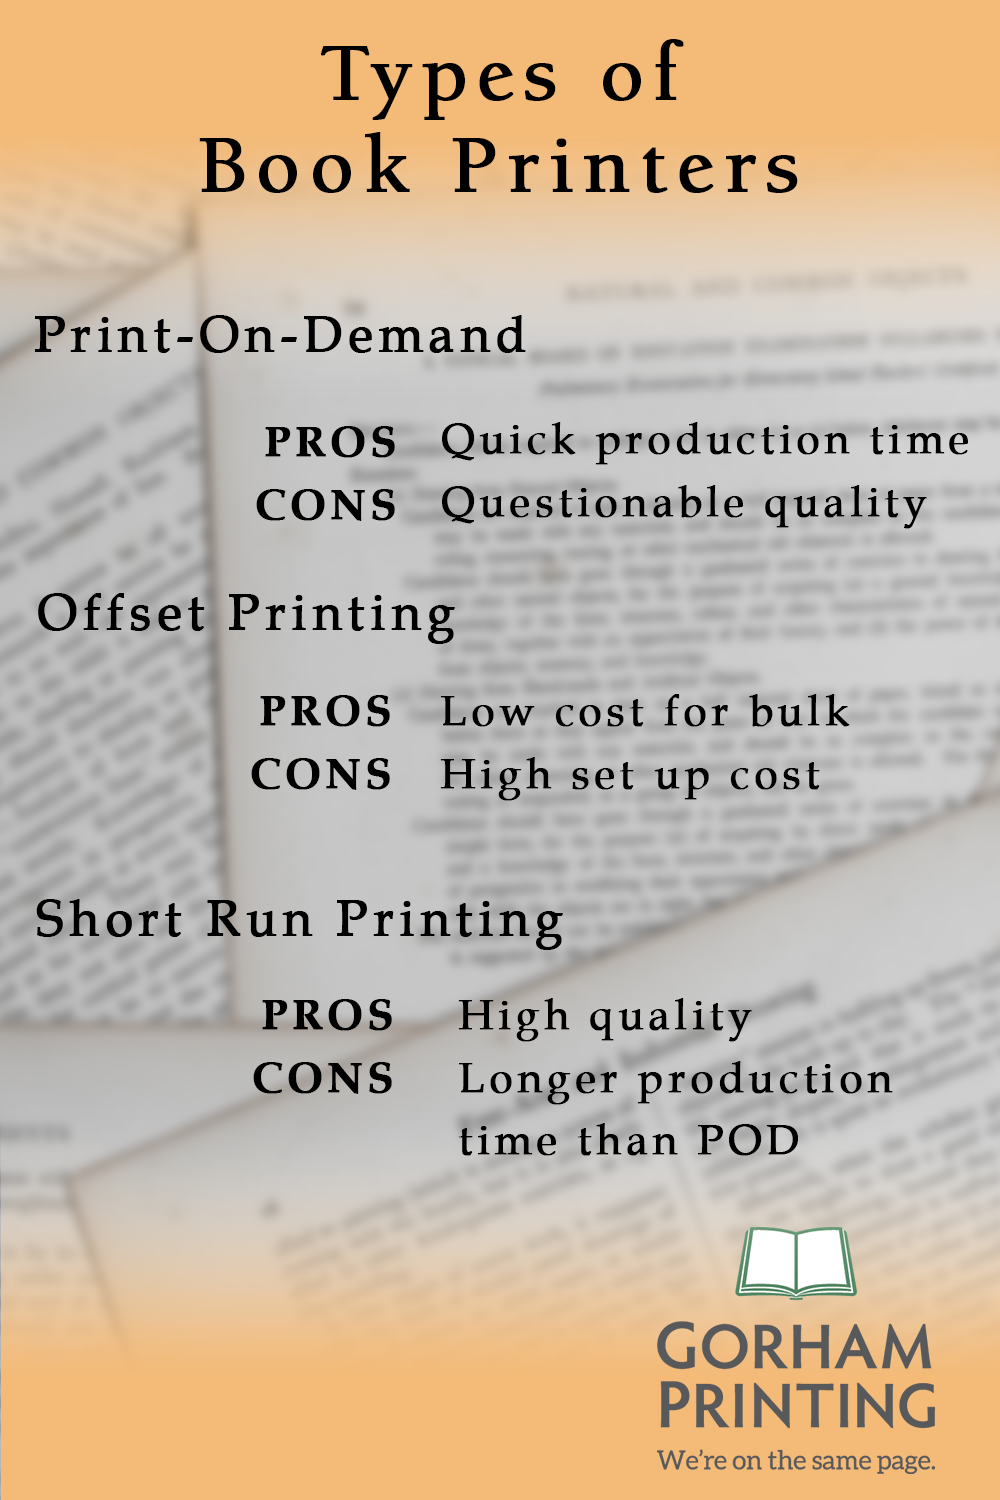 types of book printers by Gorham Printing